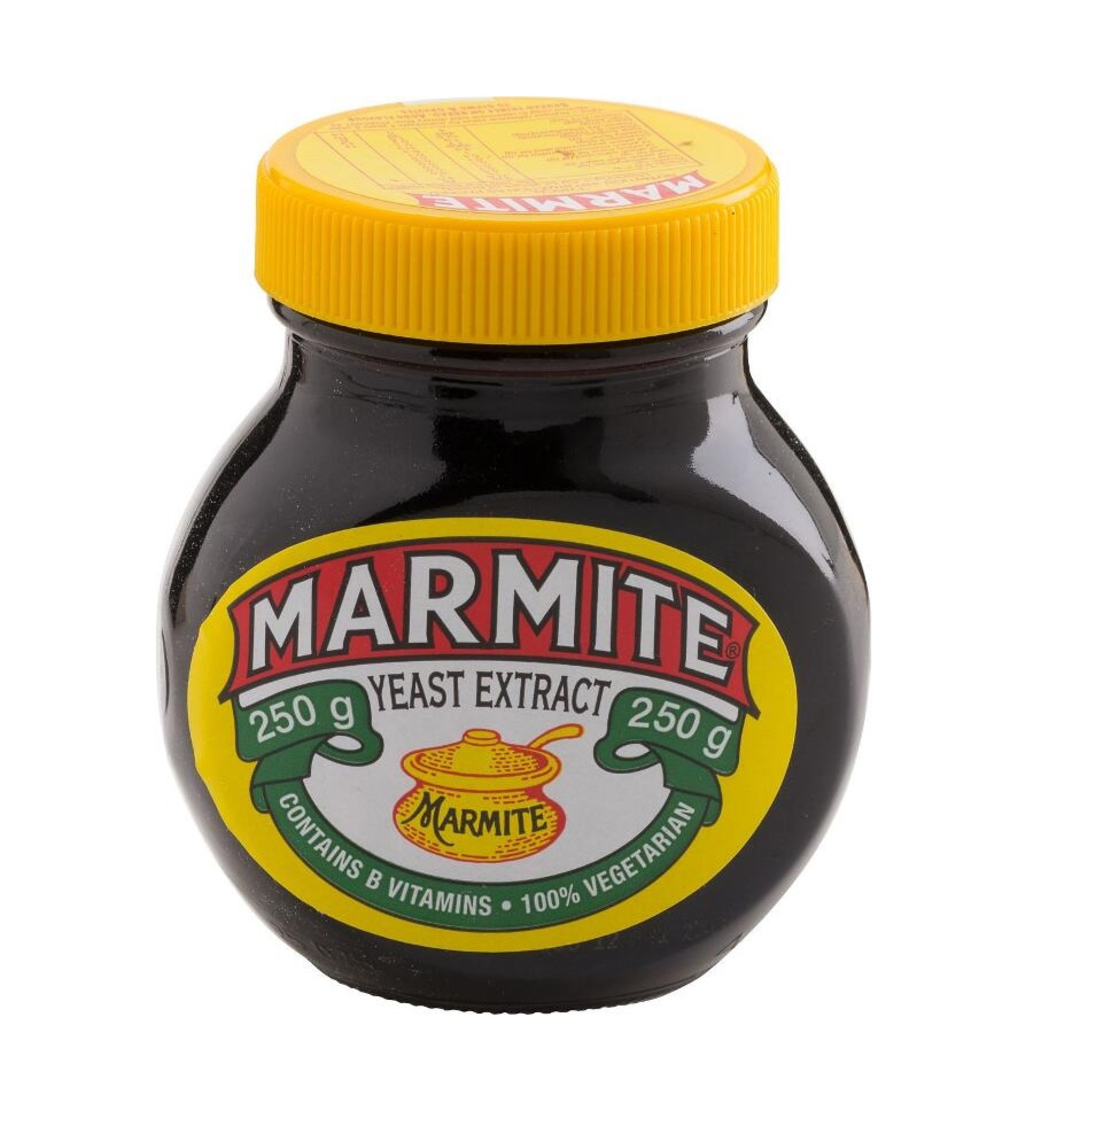 Marmite Black Spread 250g